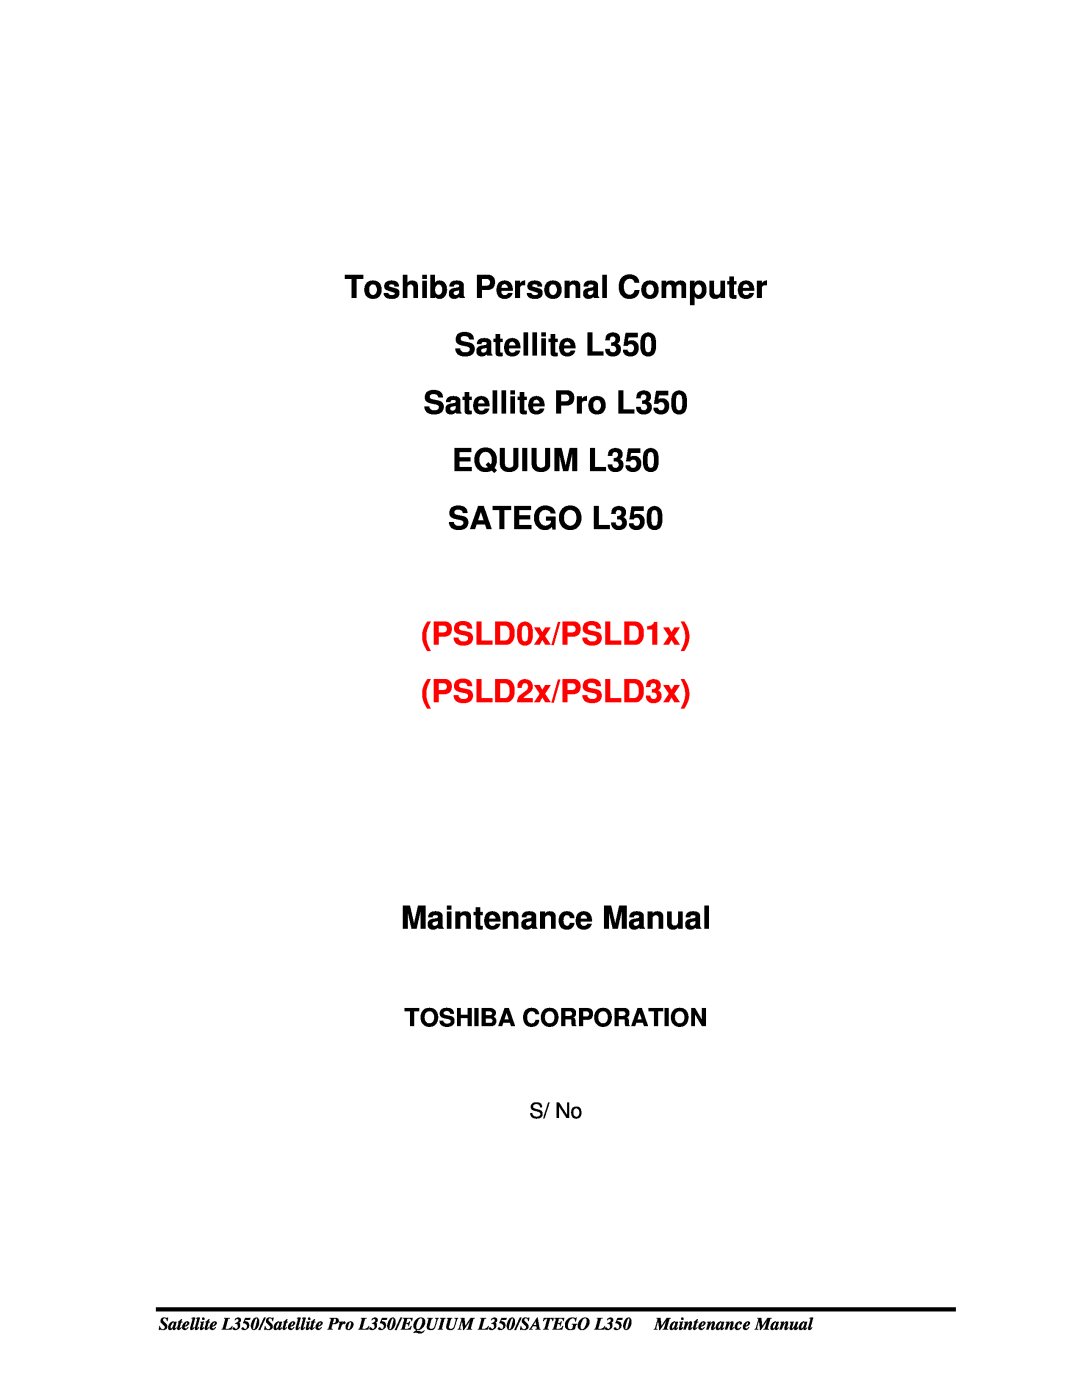 Toshiba PSLD2X, PSLD1X manual Toshiba Personal Computer Satellite L350 Satellite Pro L350, EQUIUM L350 SATEGO L350, S/ No 